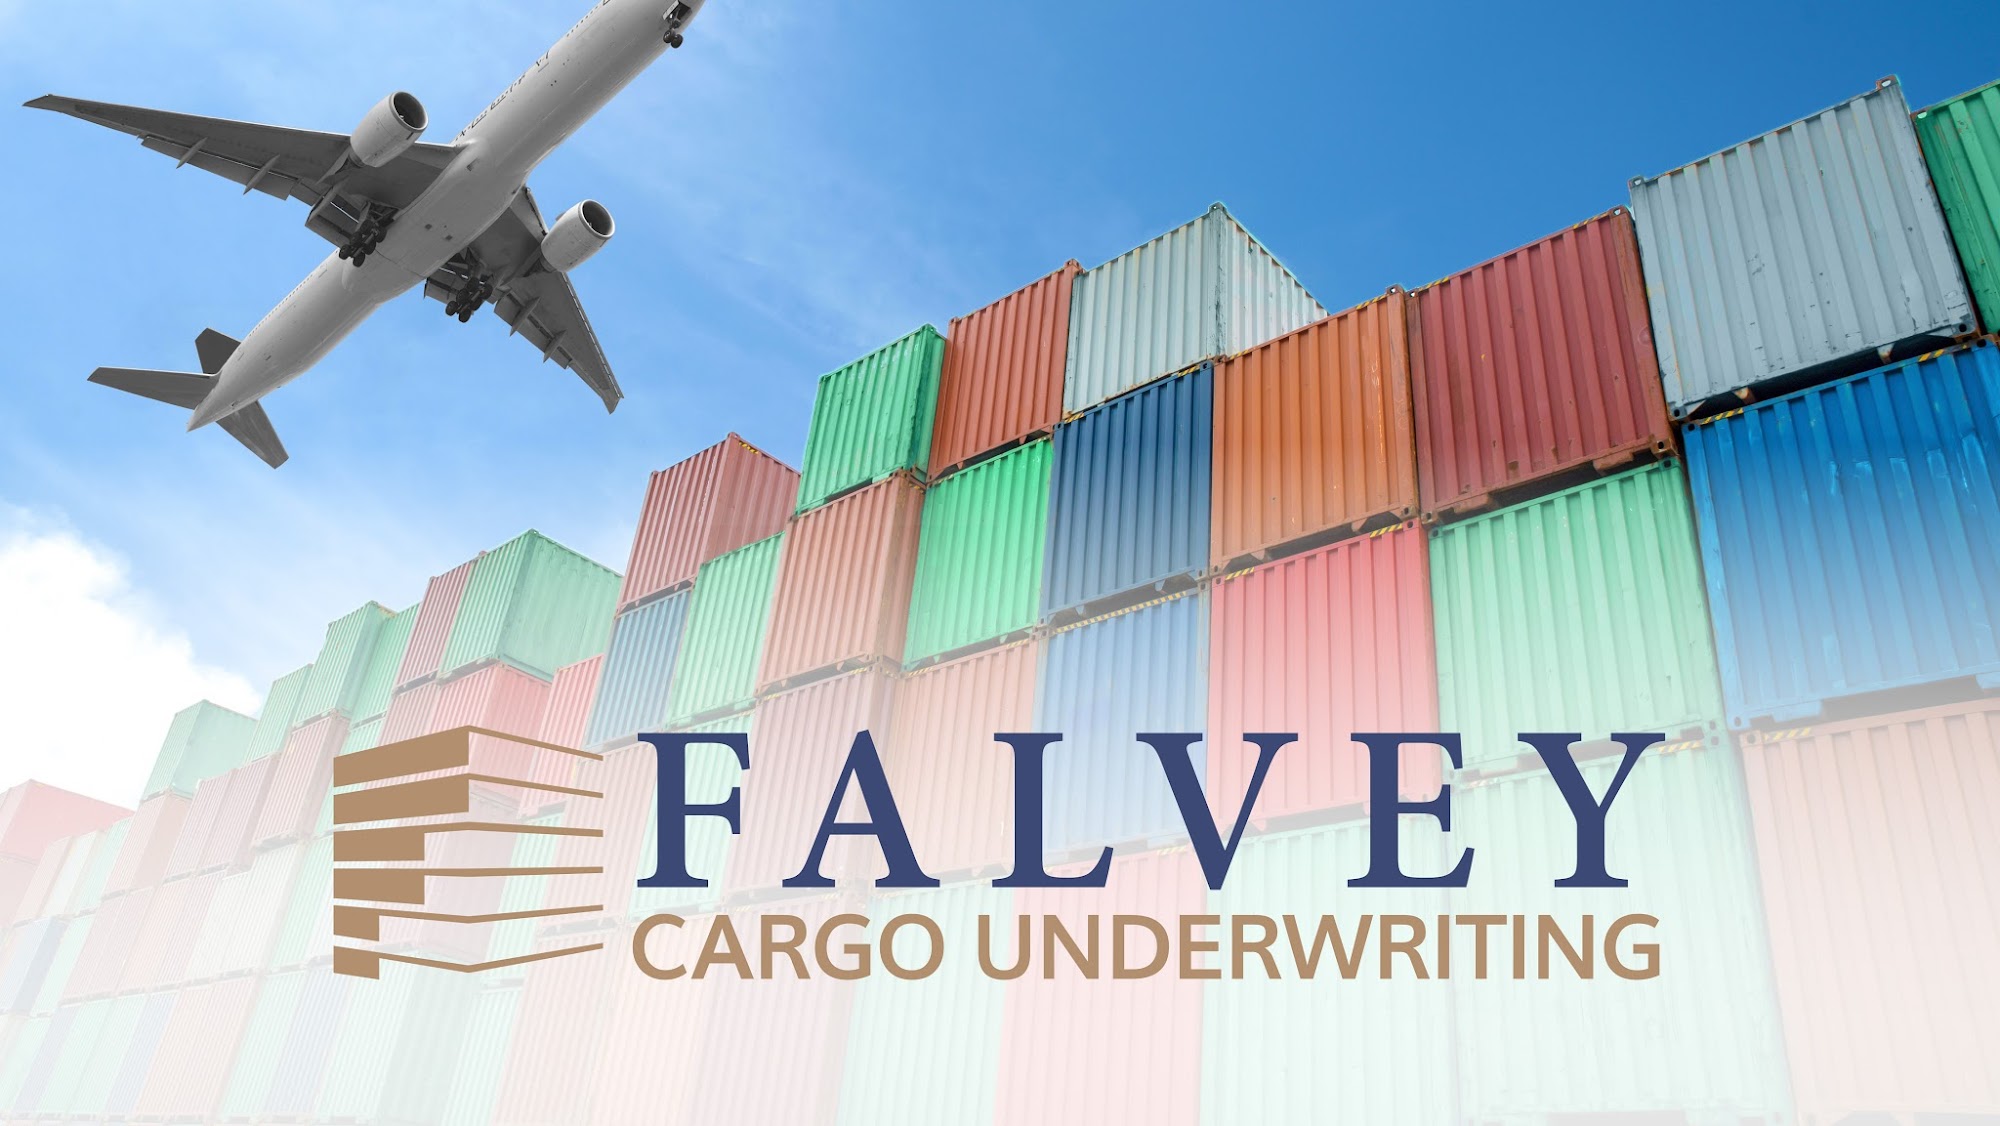 Falvey Cargo Underwriting